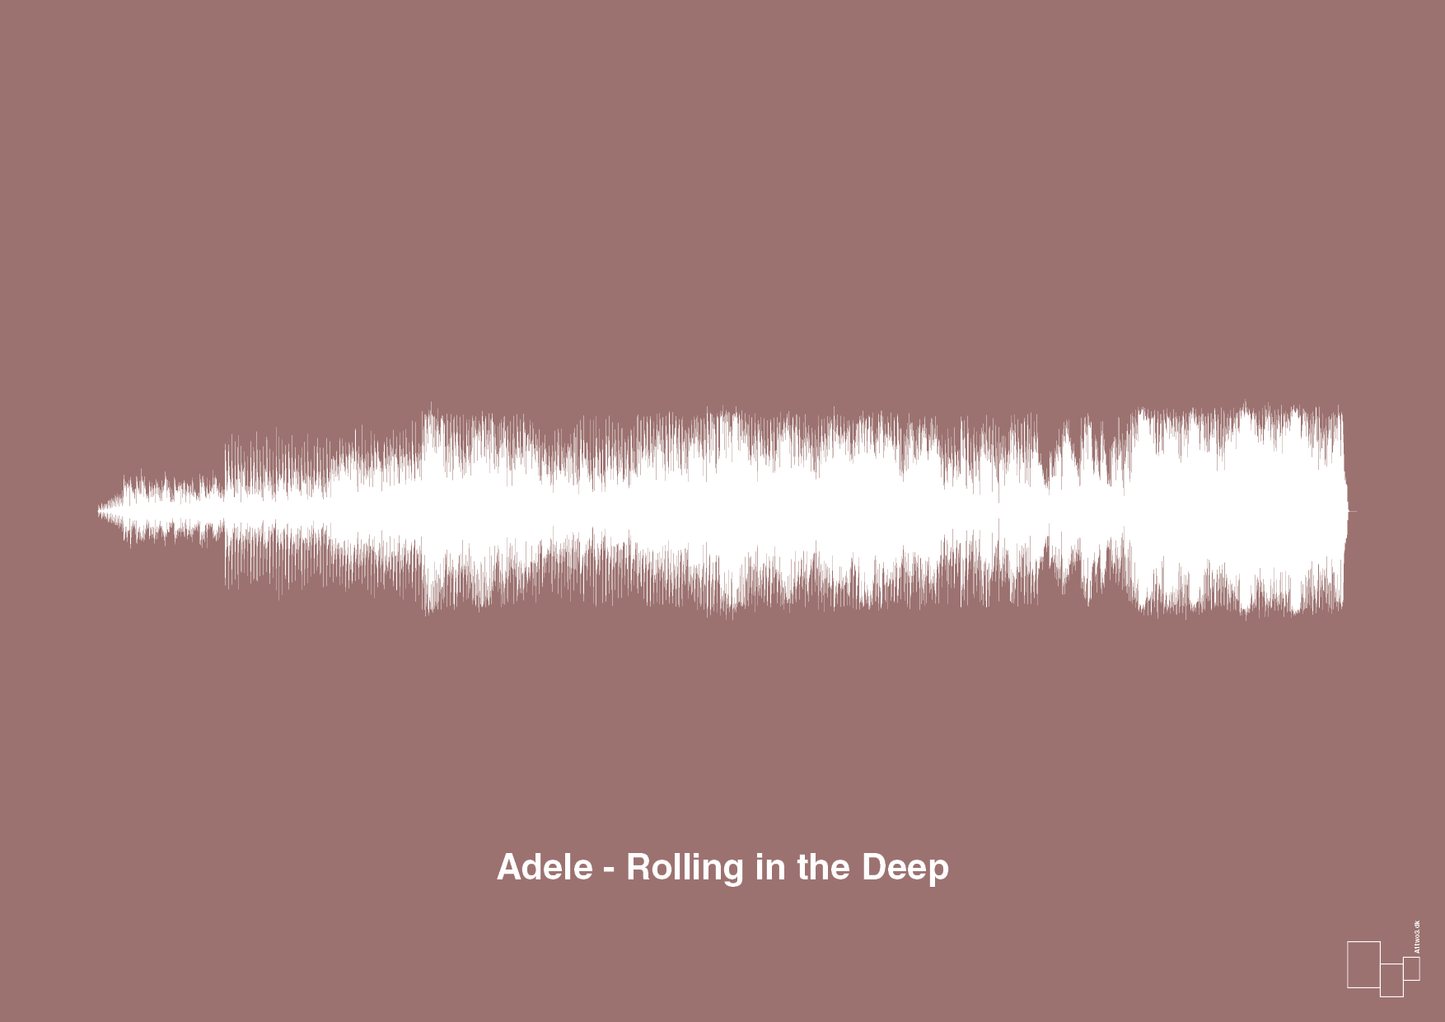 adele - rolling in the deep - Plakat med Musik i Plum